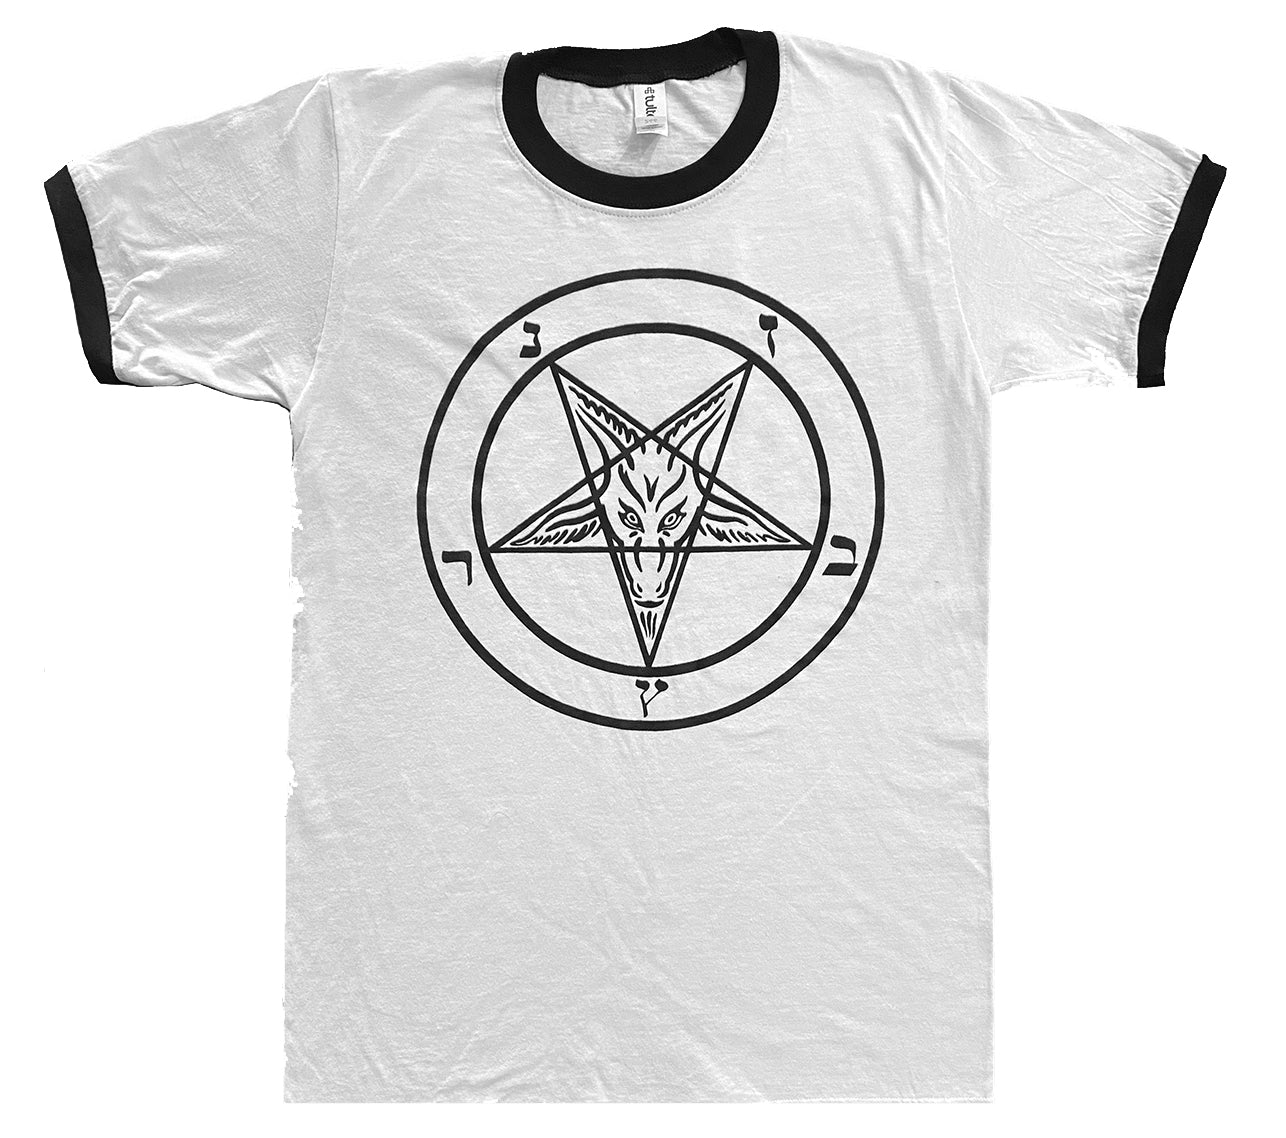 Pentagram Ringer T shirt  Super stylish satanic / witchy / halloween Tee , white body T shirt with black printed Pentagram design 